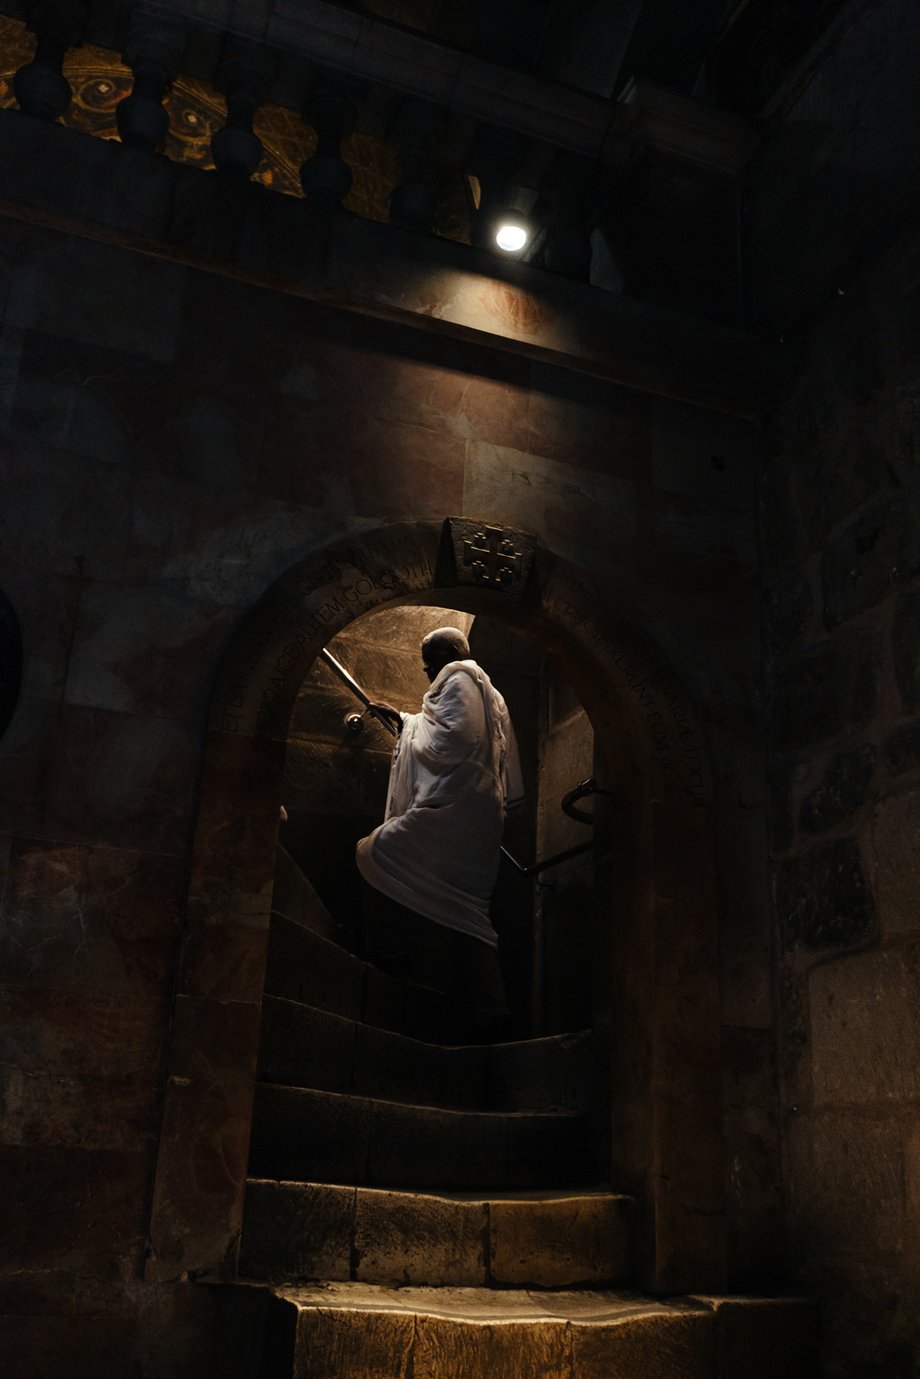 David Vaaknin's photo of A Christian pilgrim climbing the stairs leading to the Golgotha